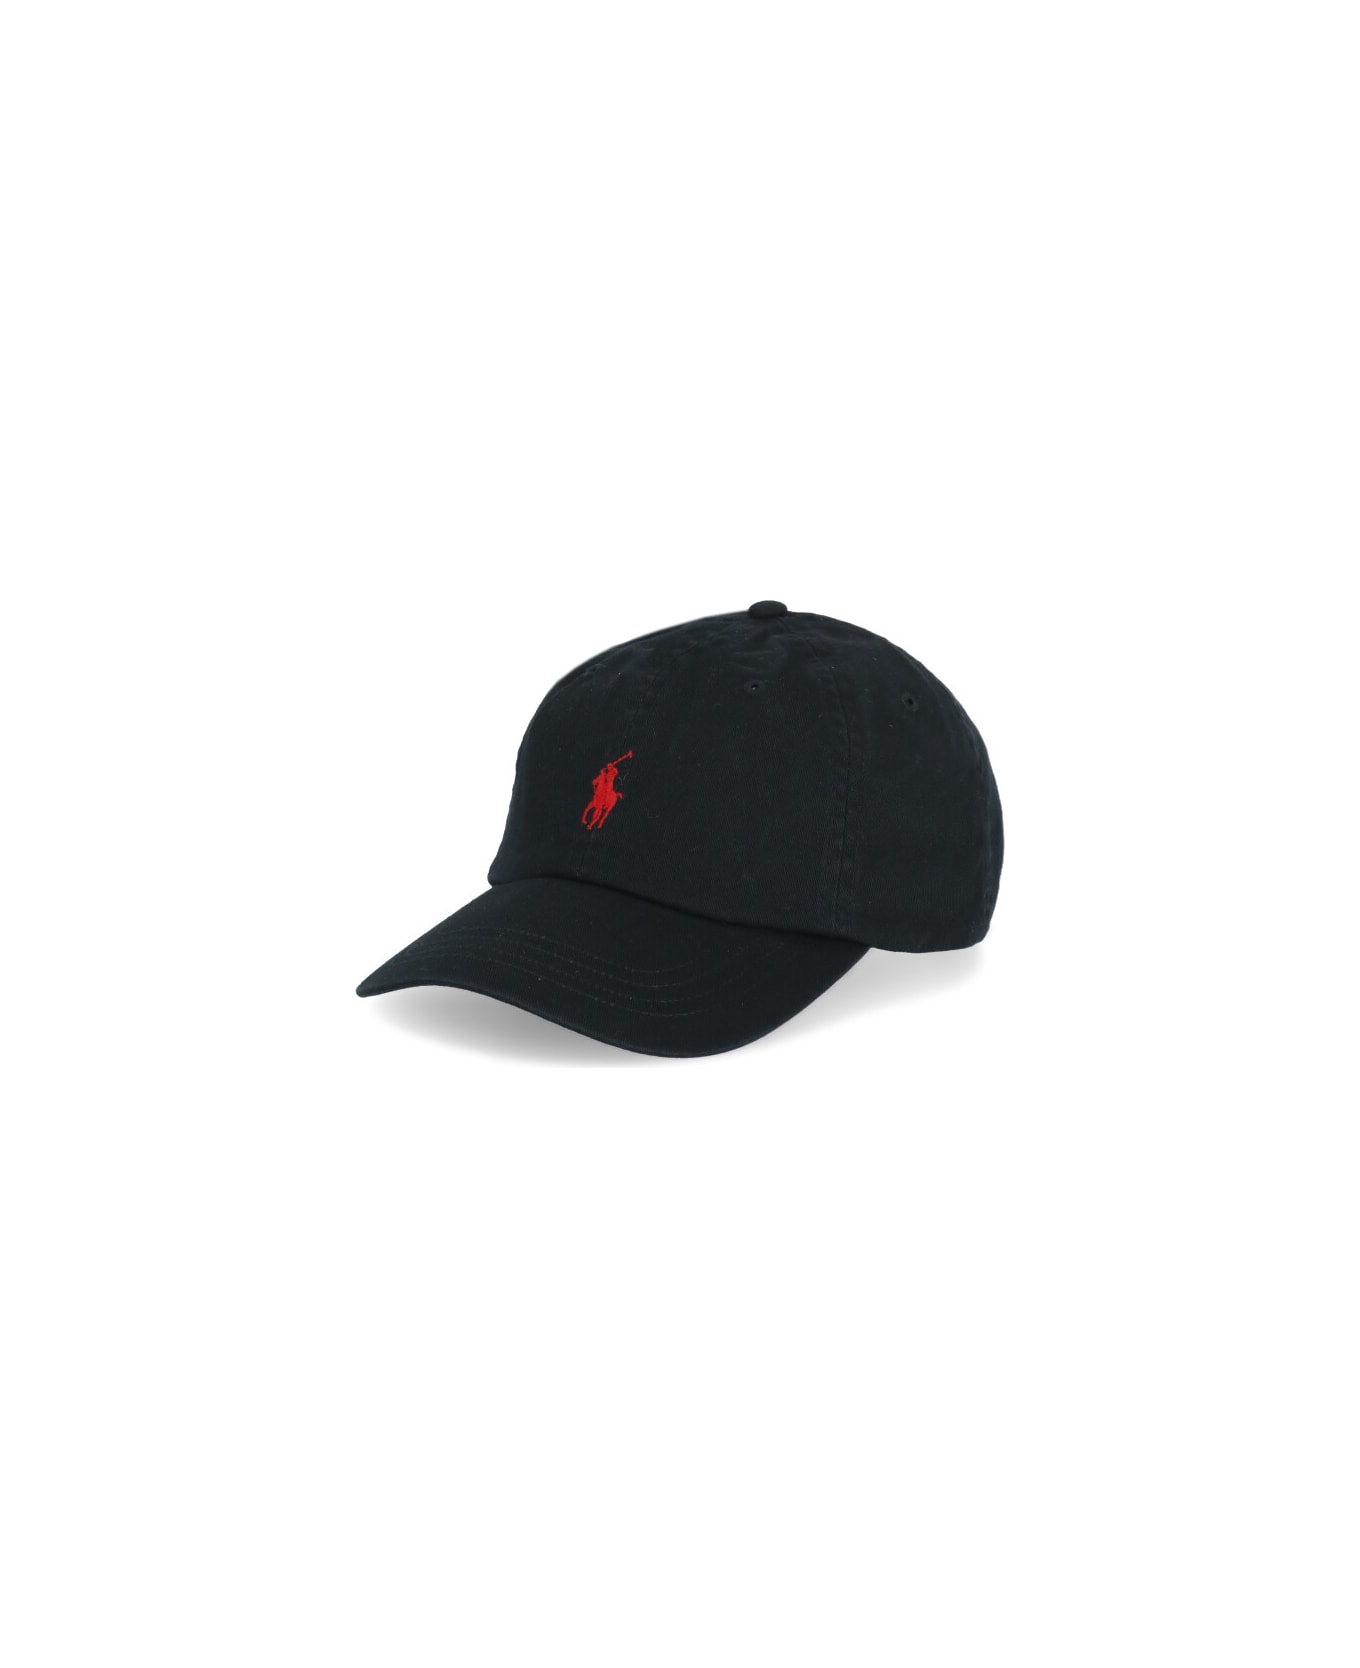 Ralph Lauren Baseball Hat With Pony - Black